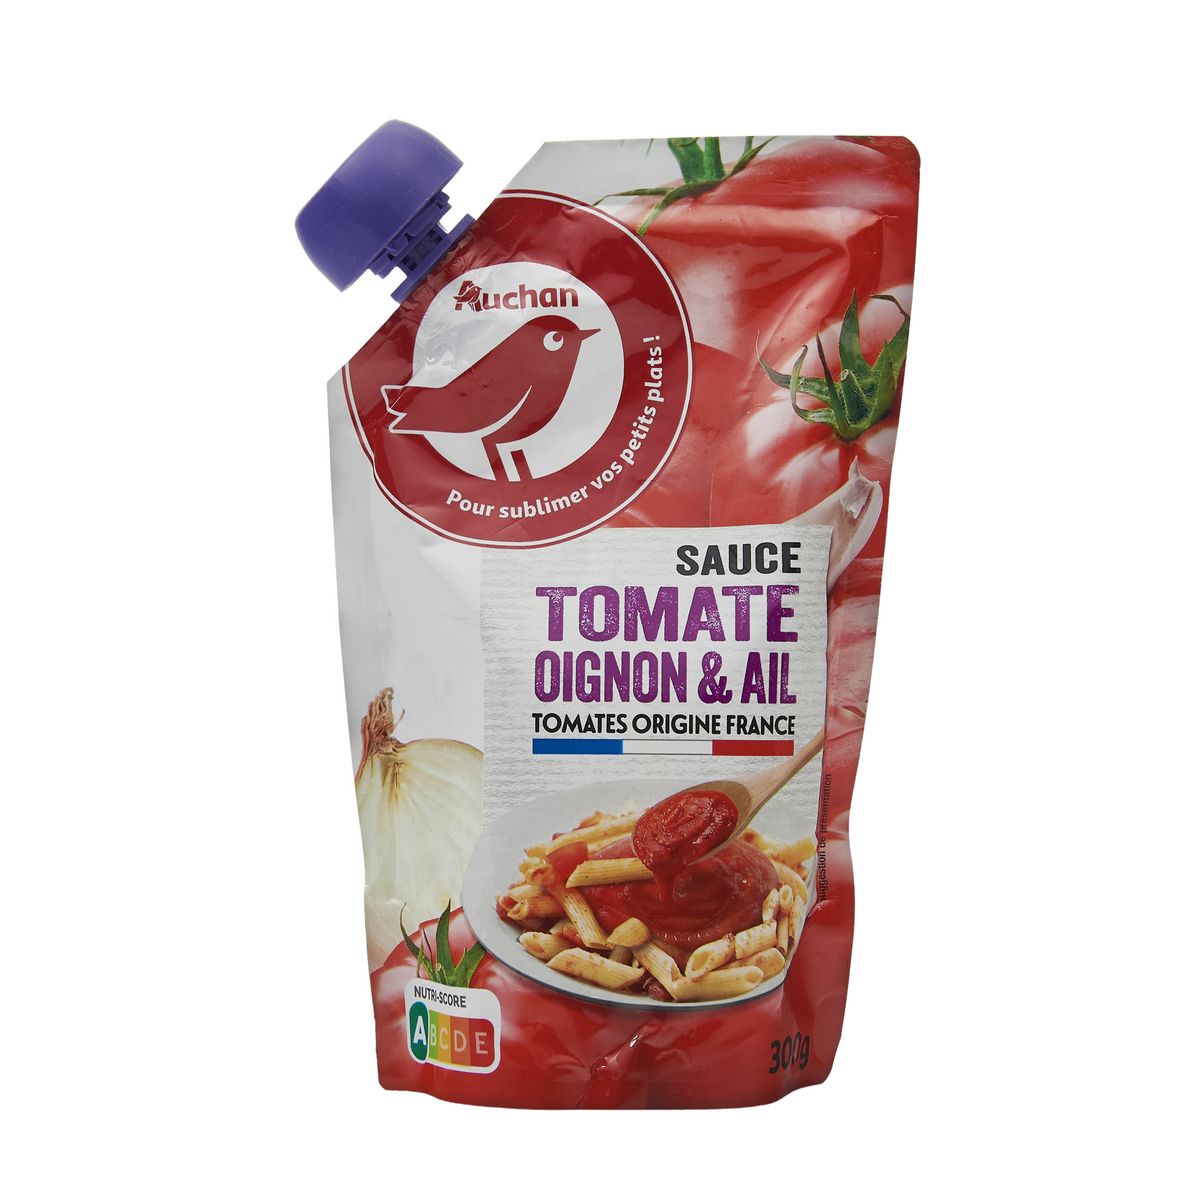 AUCHAN Sauce tomate oignon ail sachet 300g